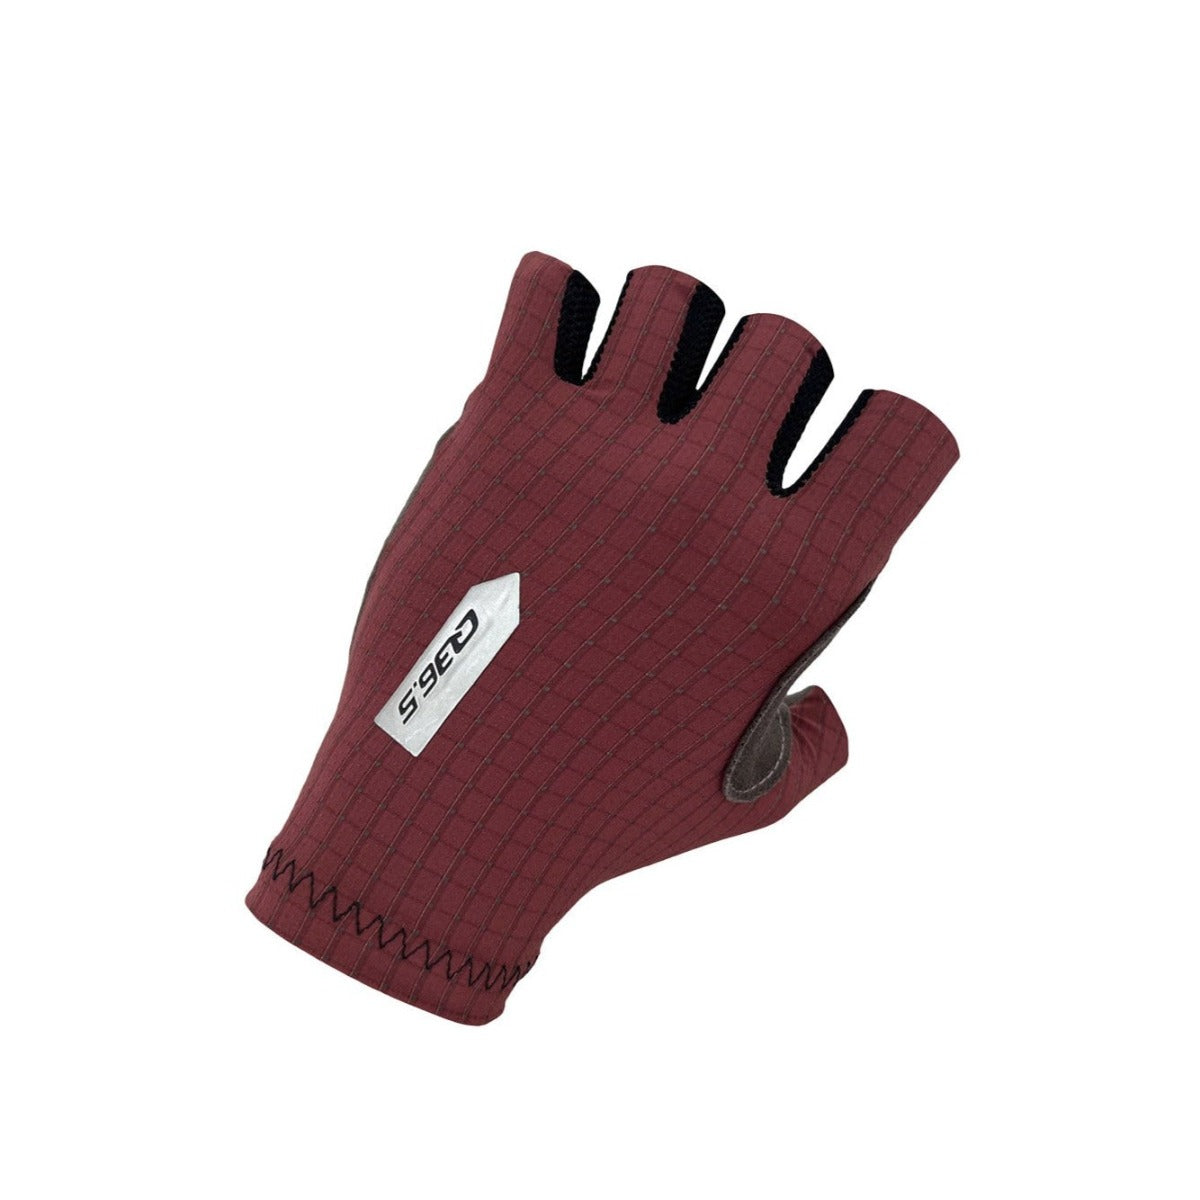 Pro Gloves